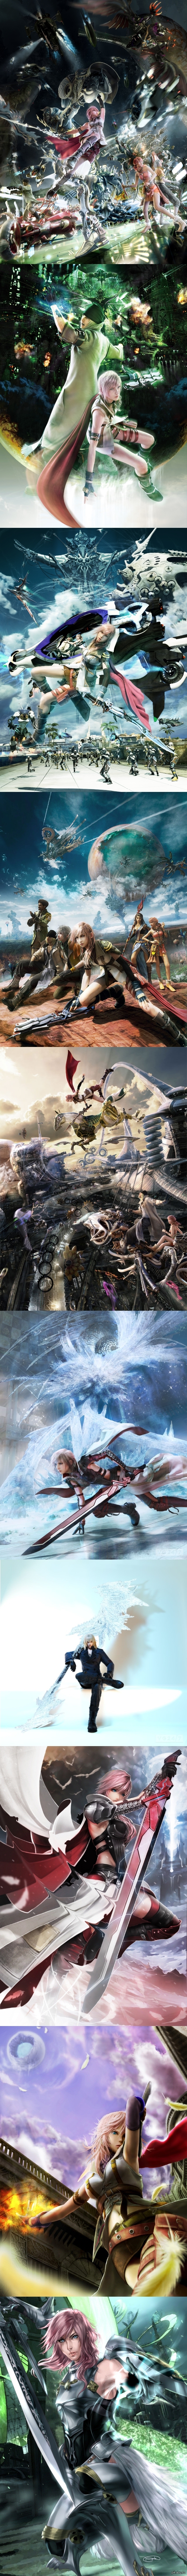 Final Fantasy XIII 